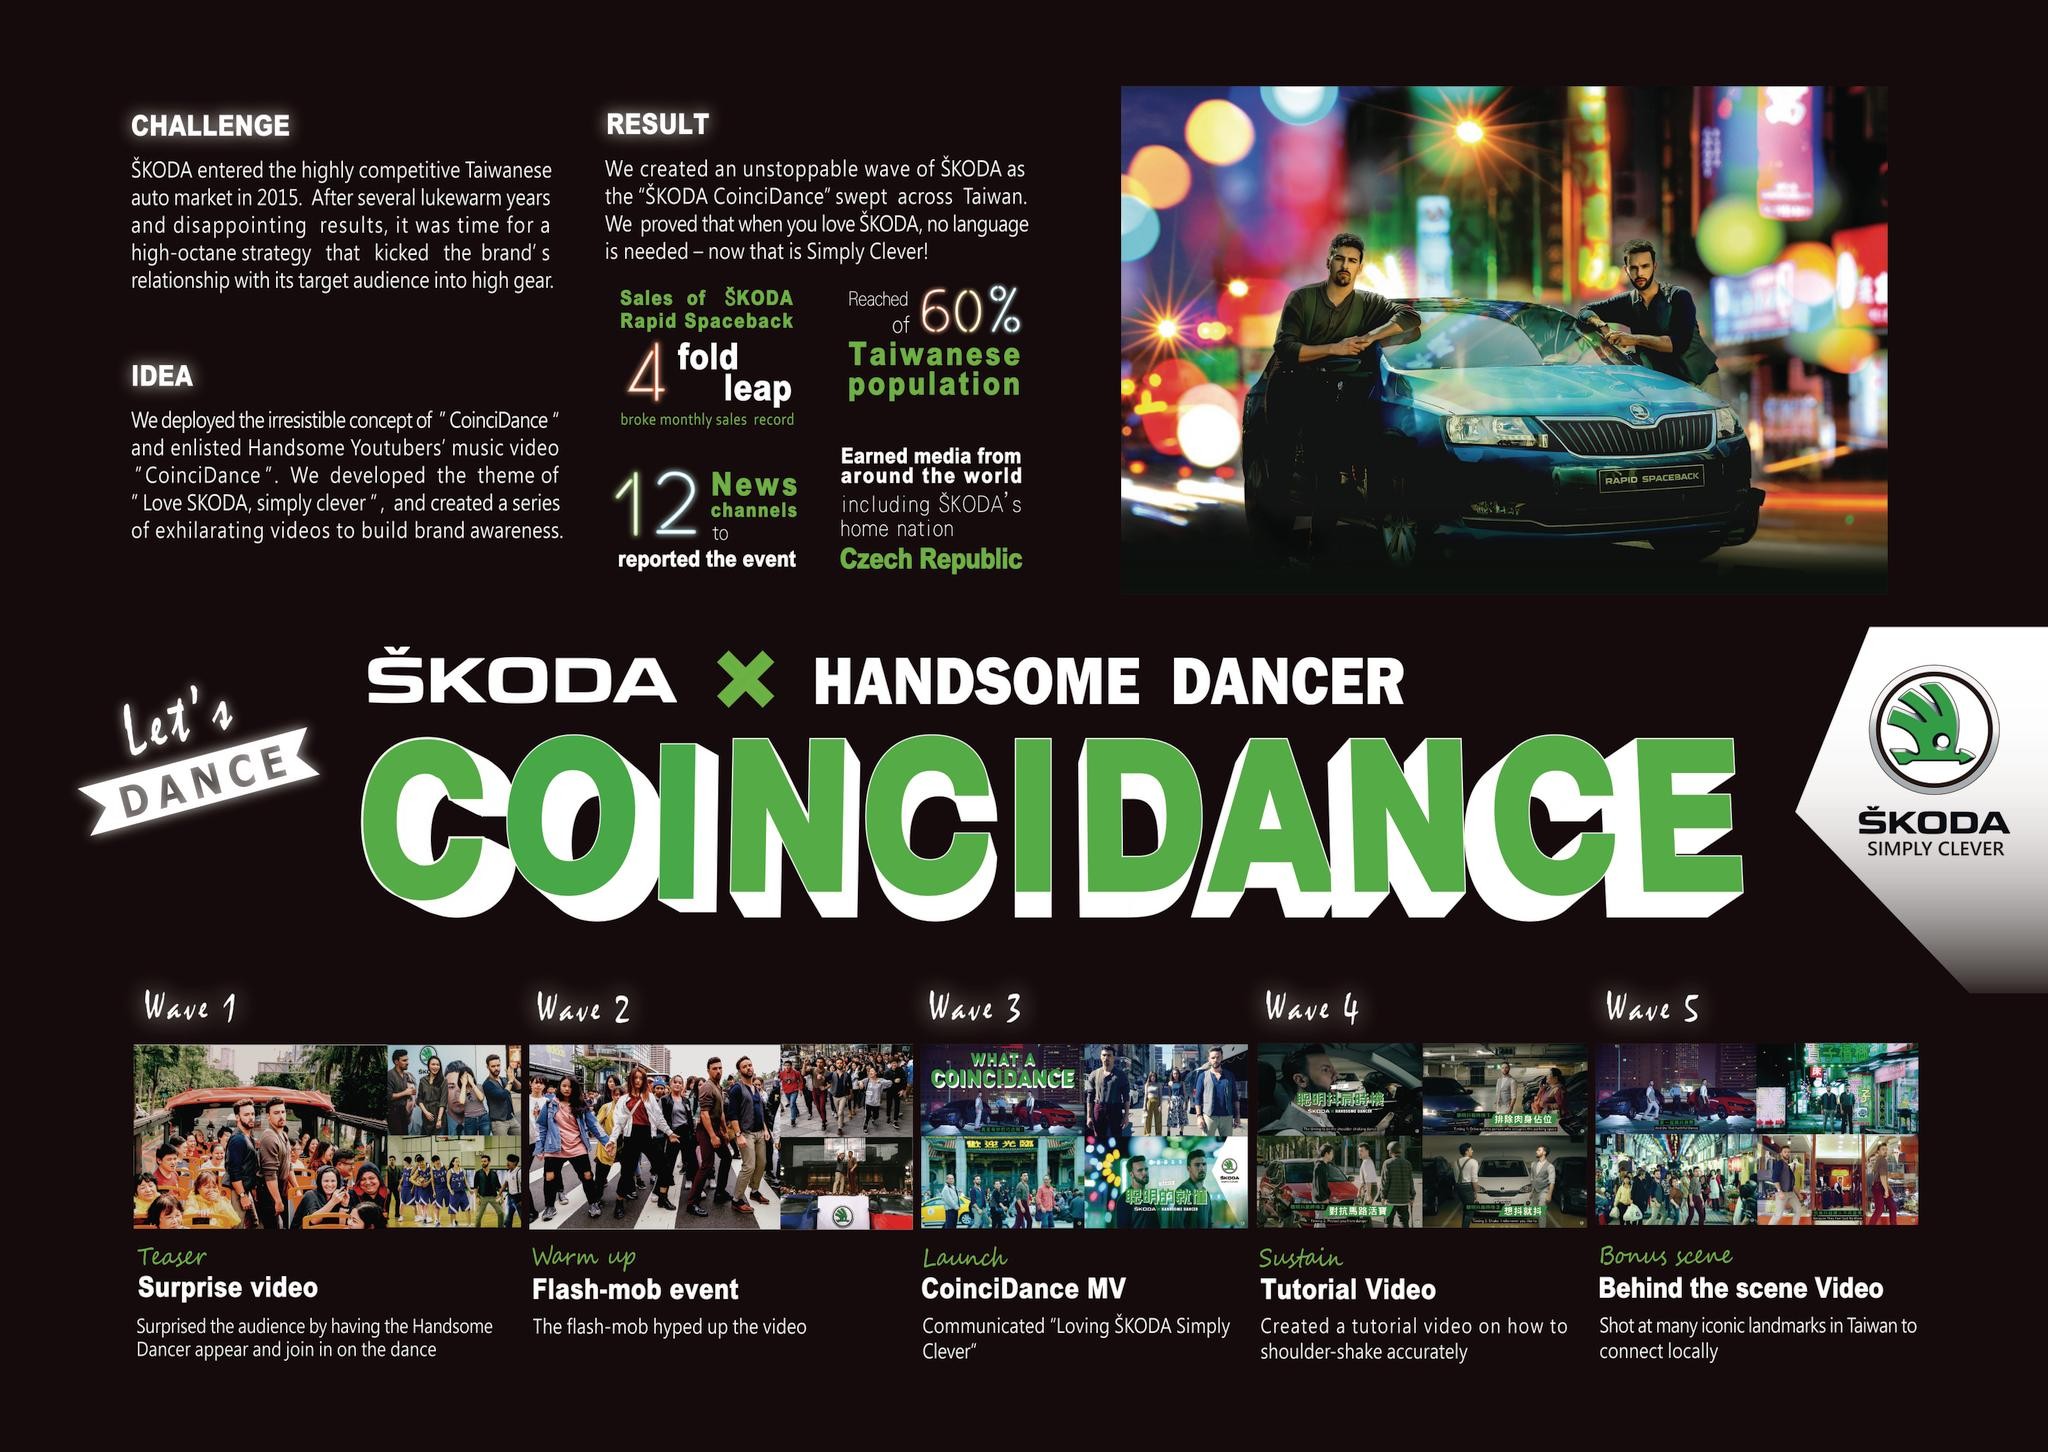 ŠKODA x Handsome Dancer “CoinciDance”